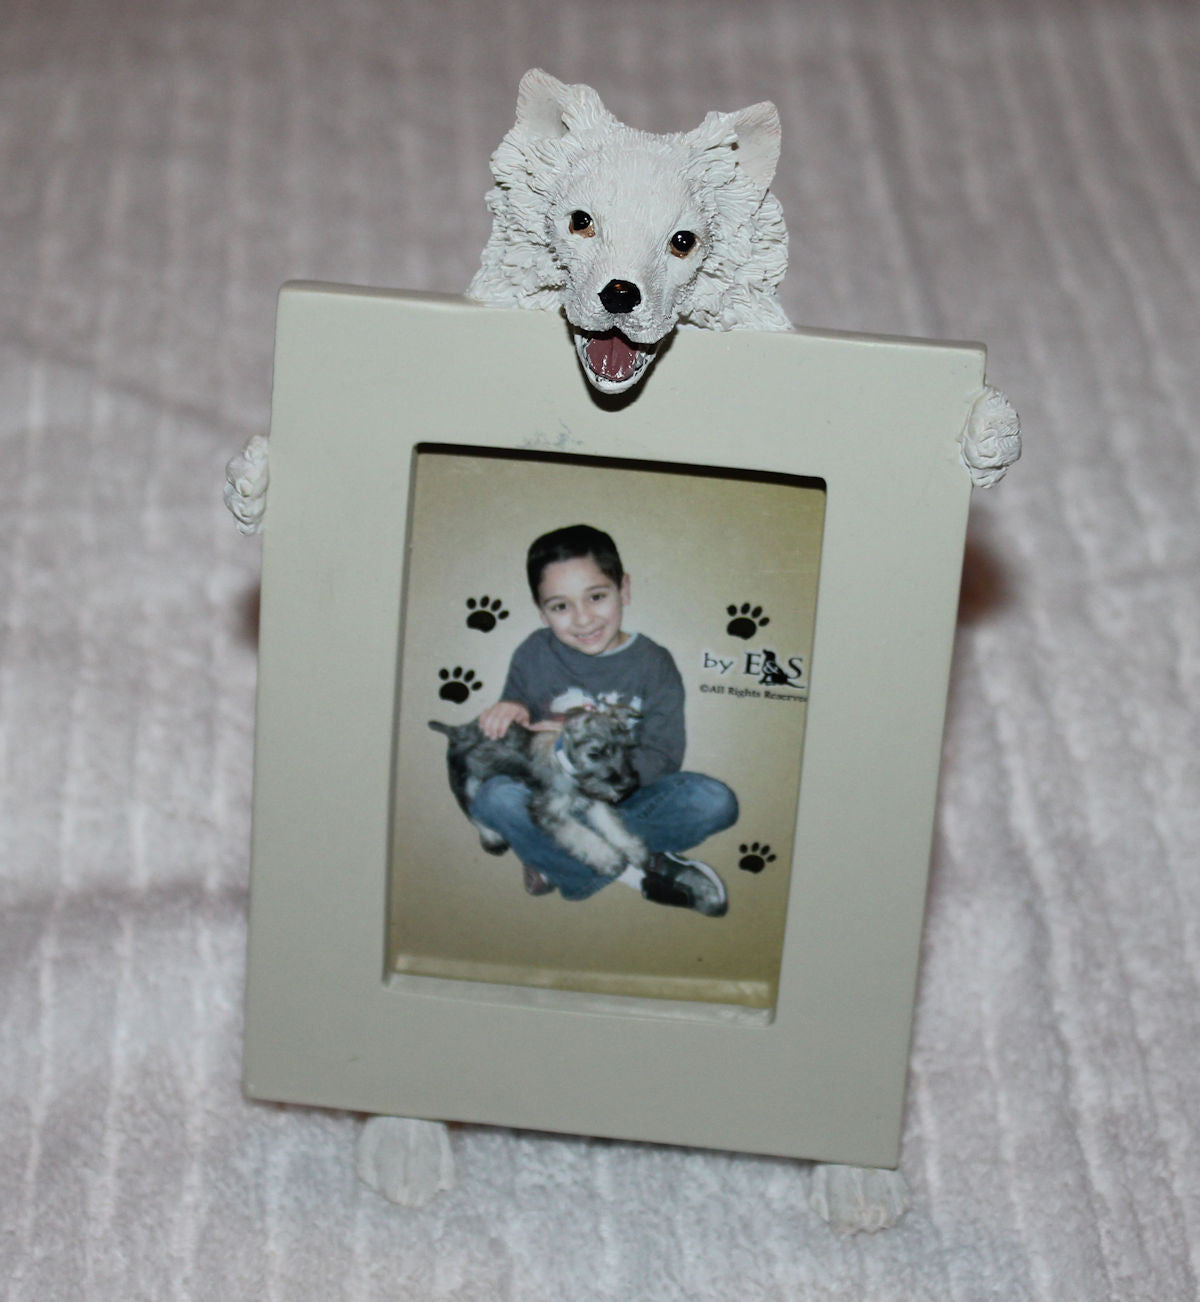 American Eskimo Dog Holding Picture Frame